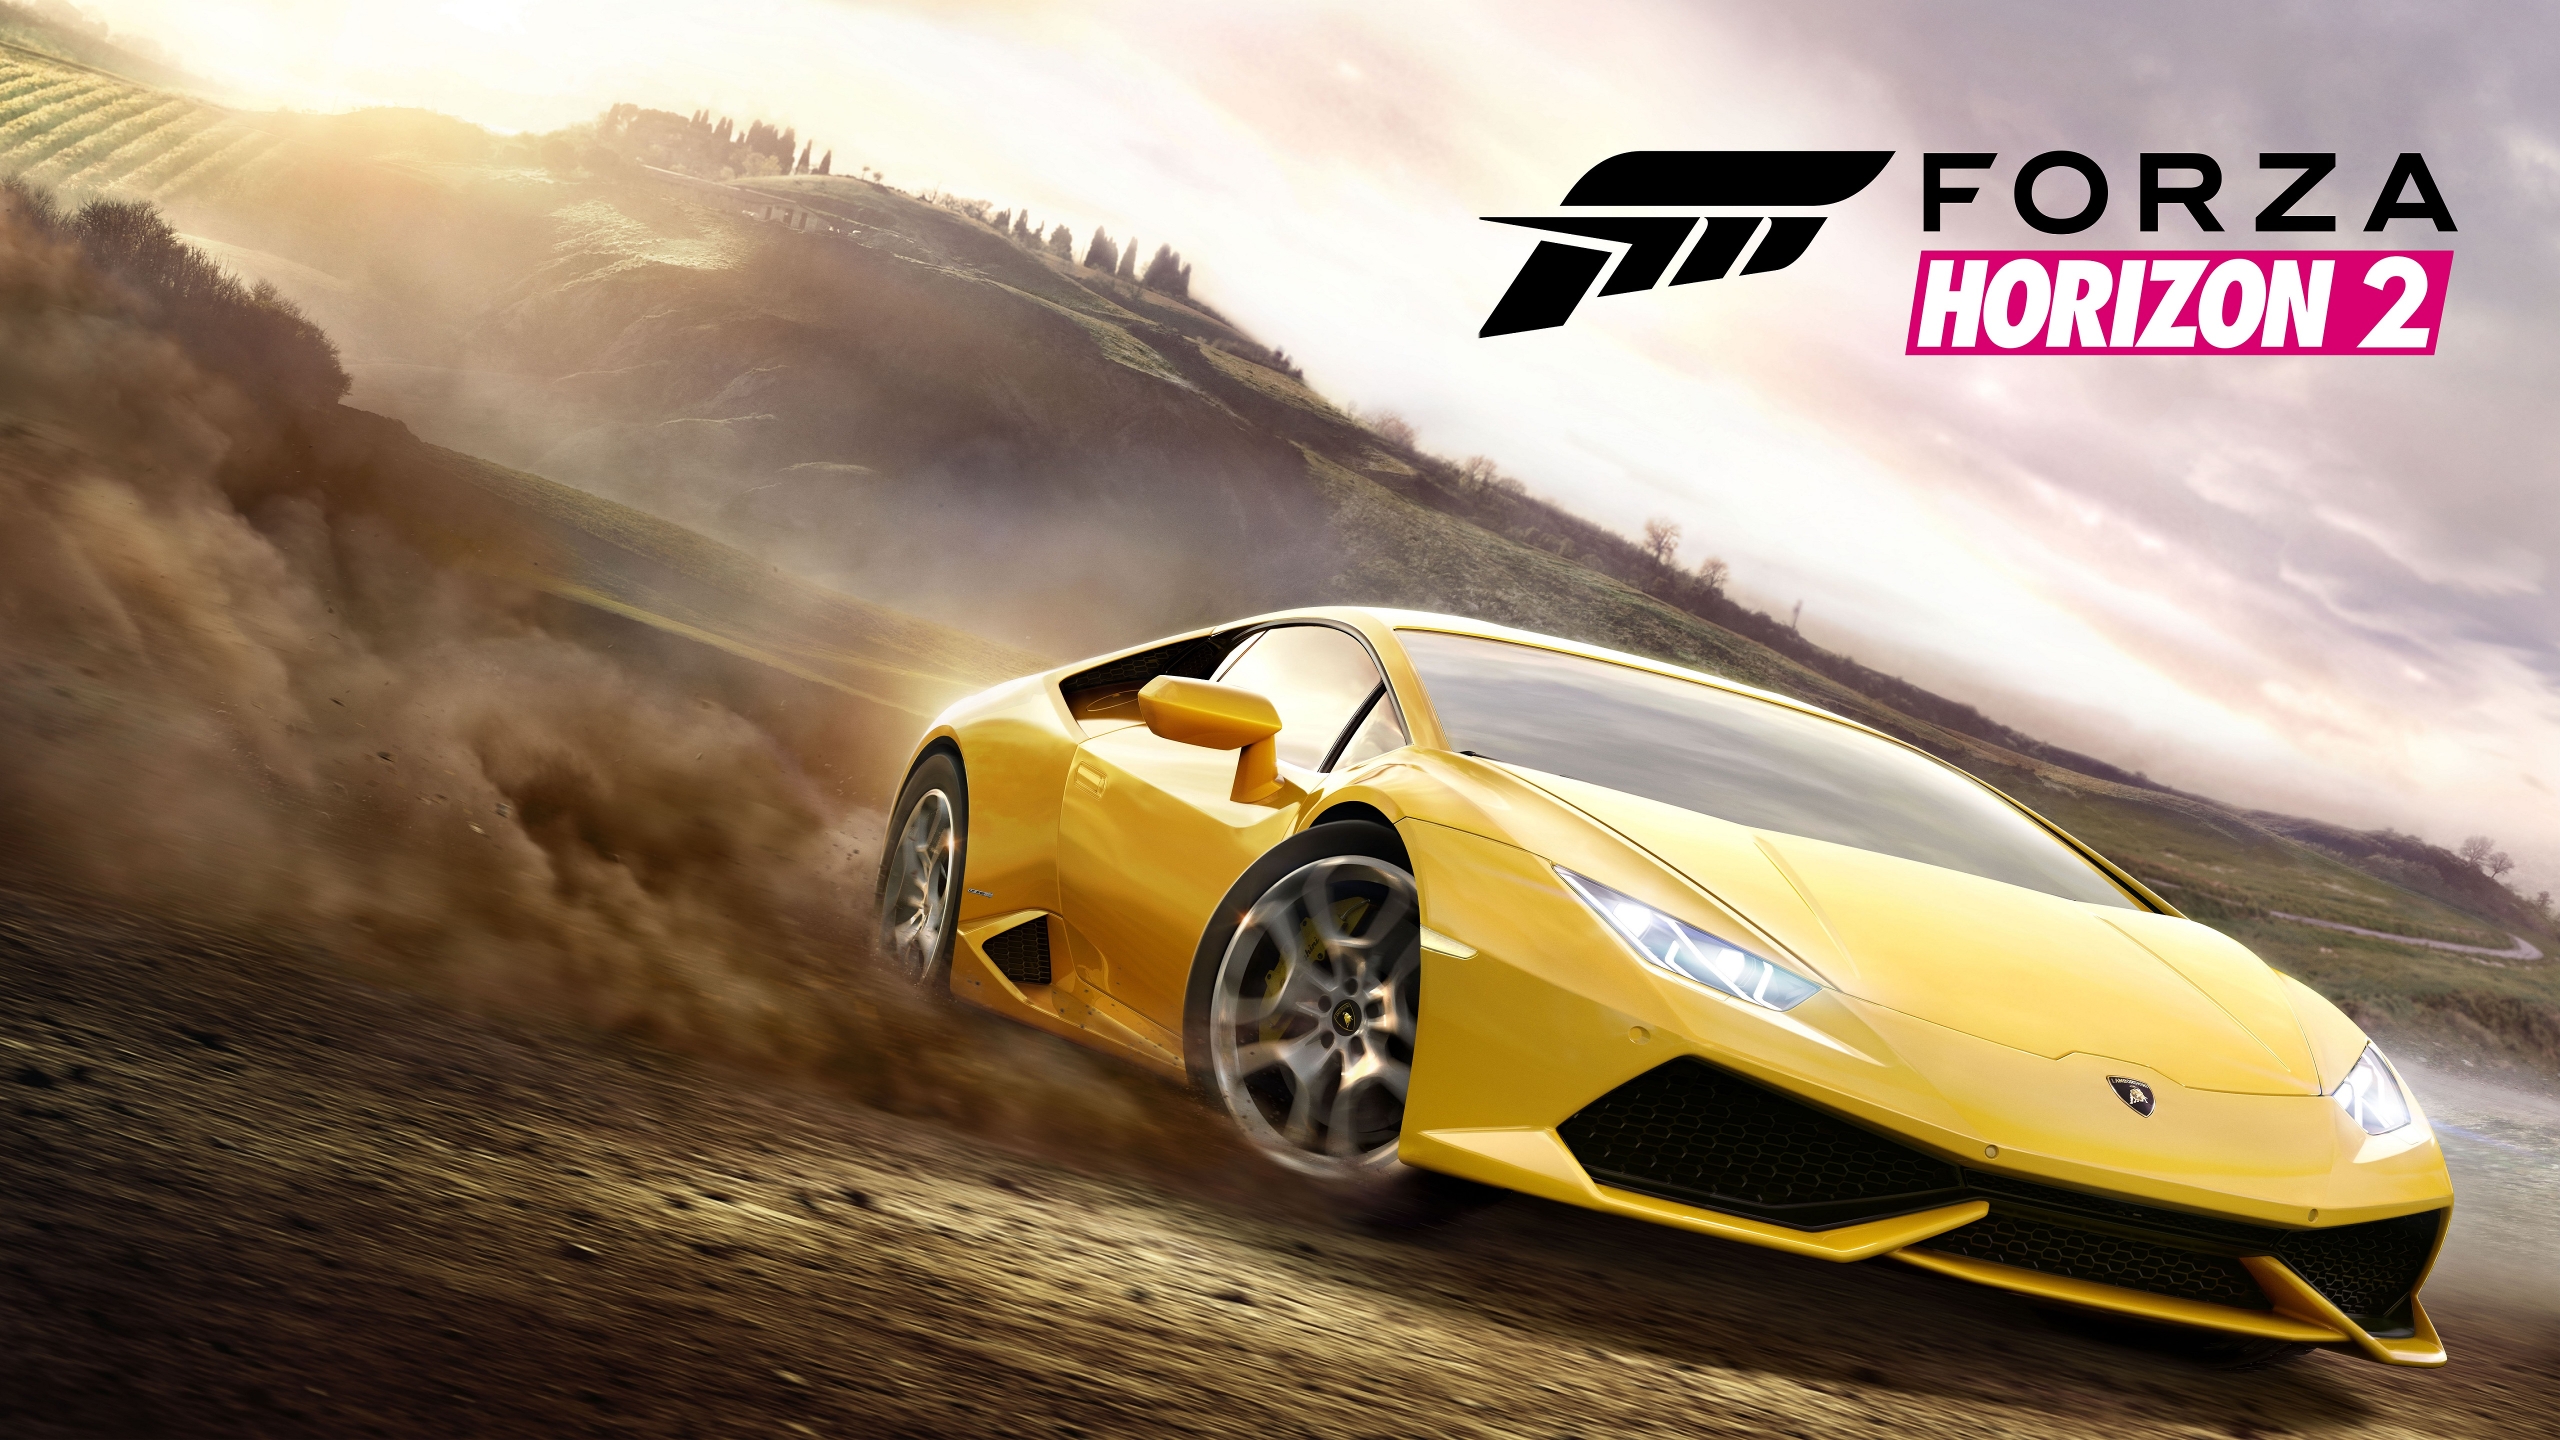 Forza Horizon 2 for 2560 x 1440 HDTV resolution